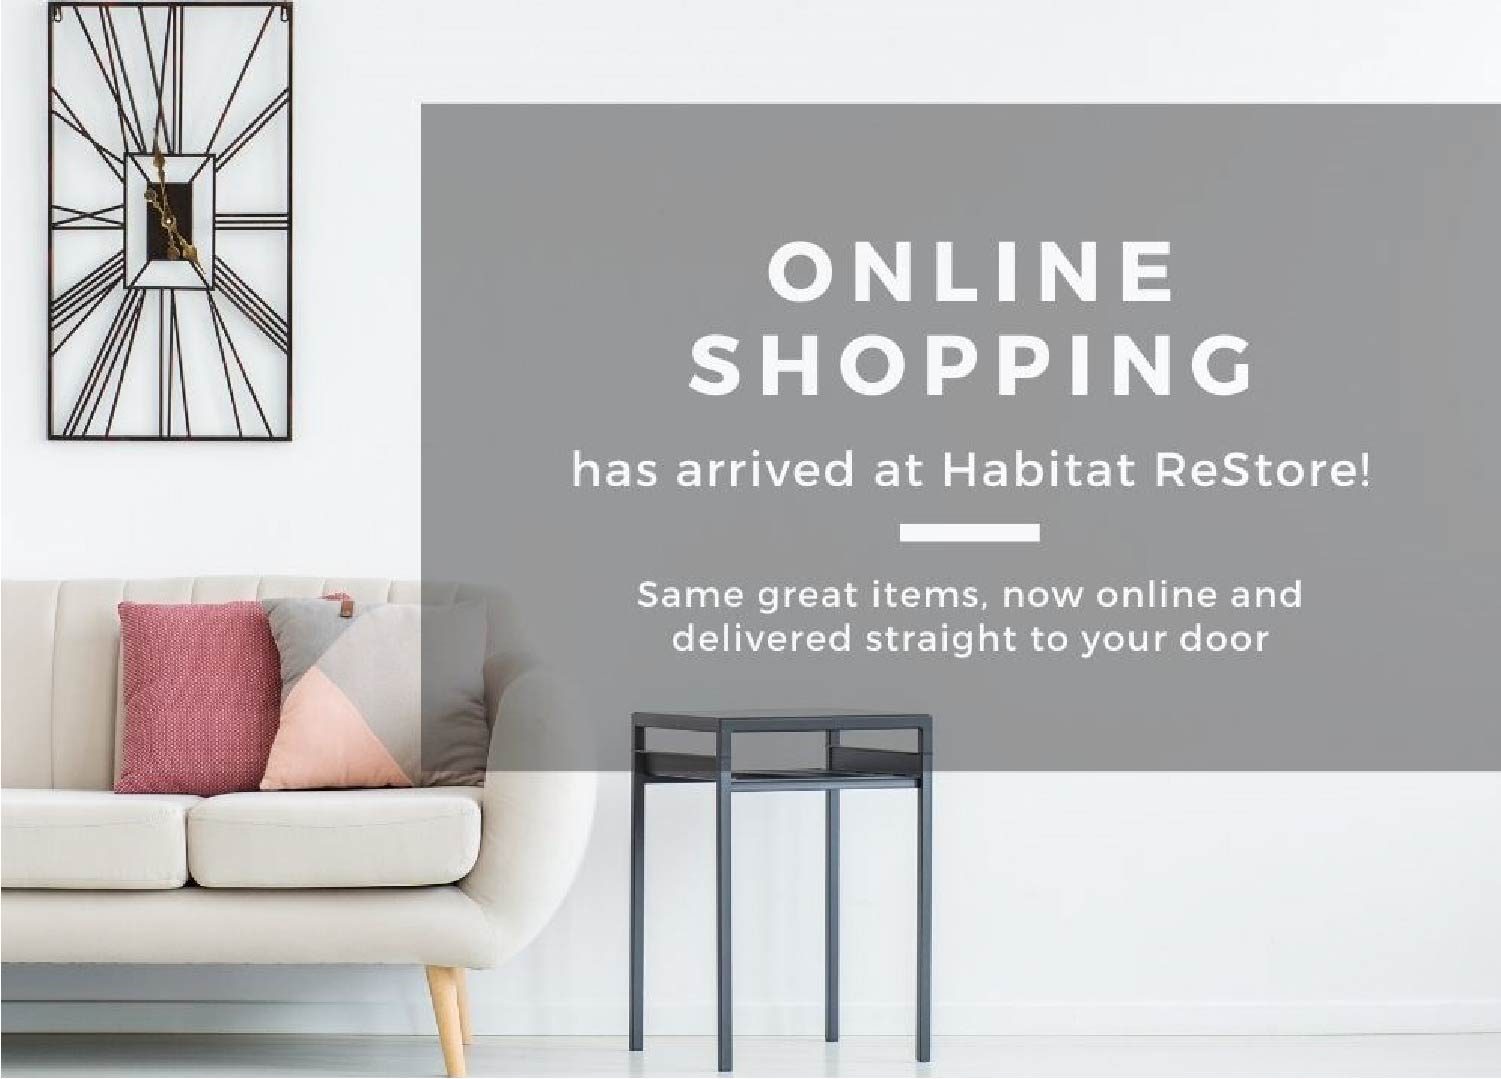 Habitat introduces new e-commerce platform